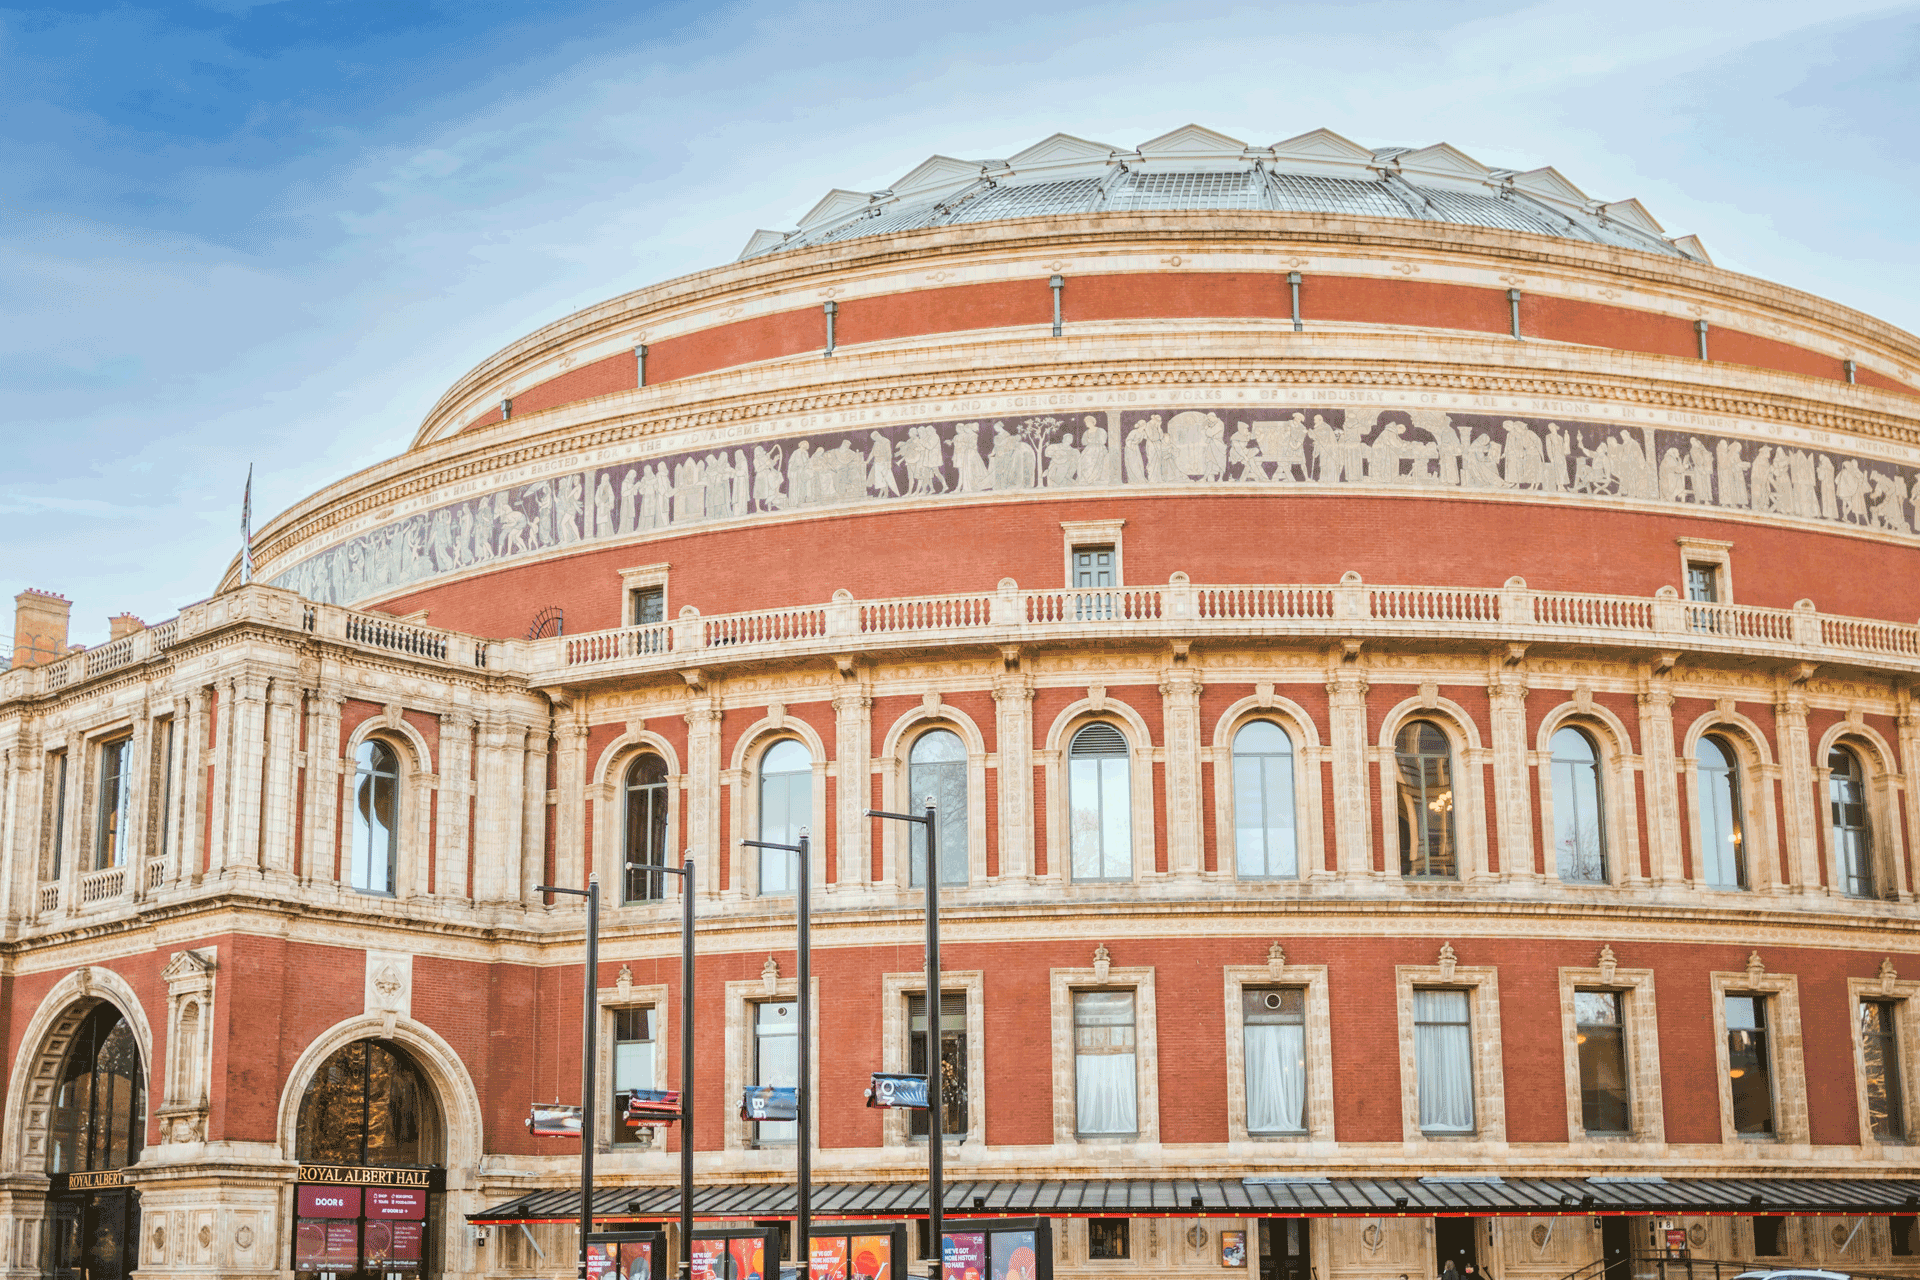 Exterior of the Royal Albert Hall.